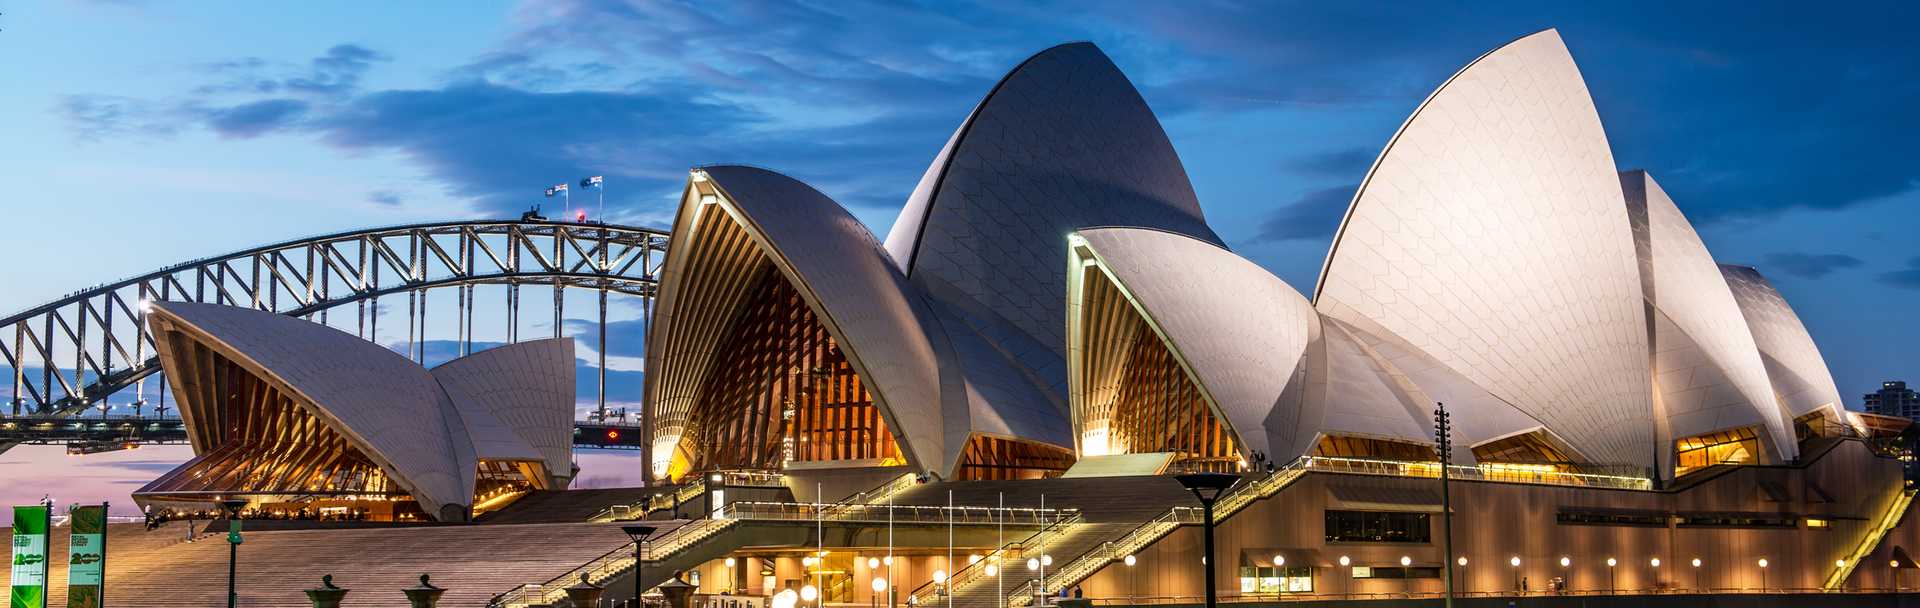 Australia &amp; New Zealand Tour - Sydney Opera House